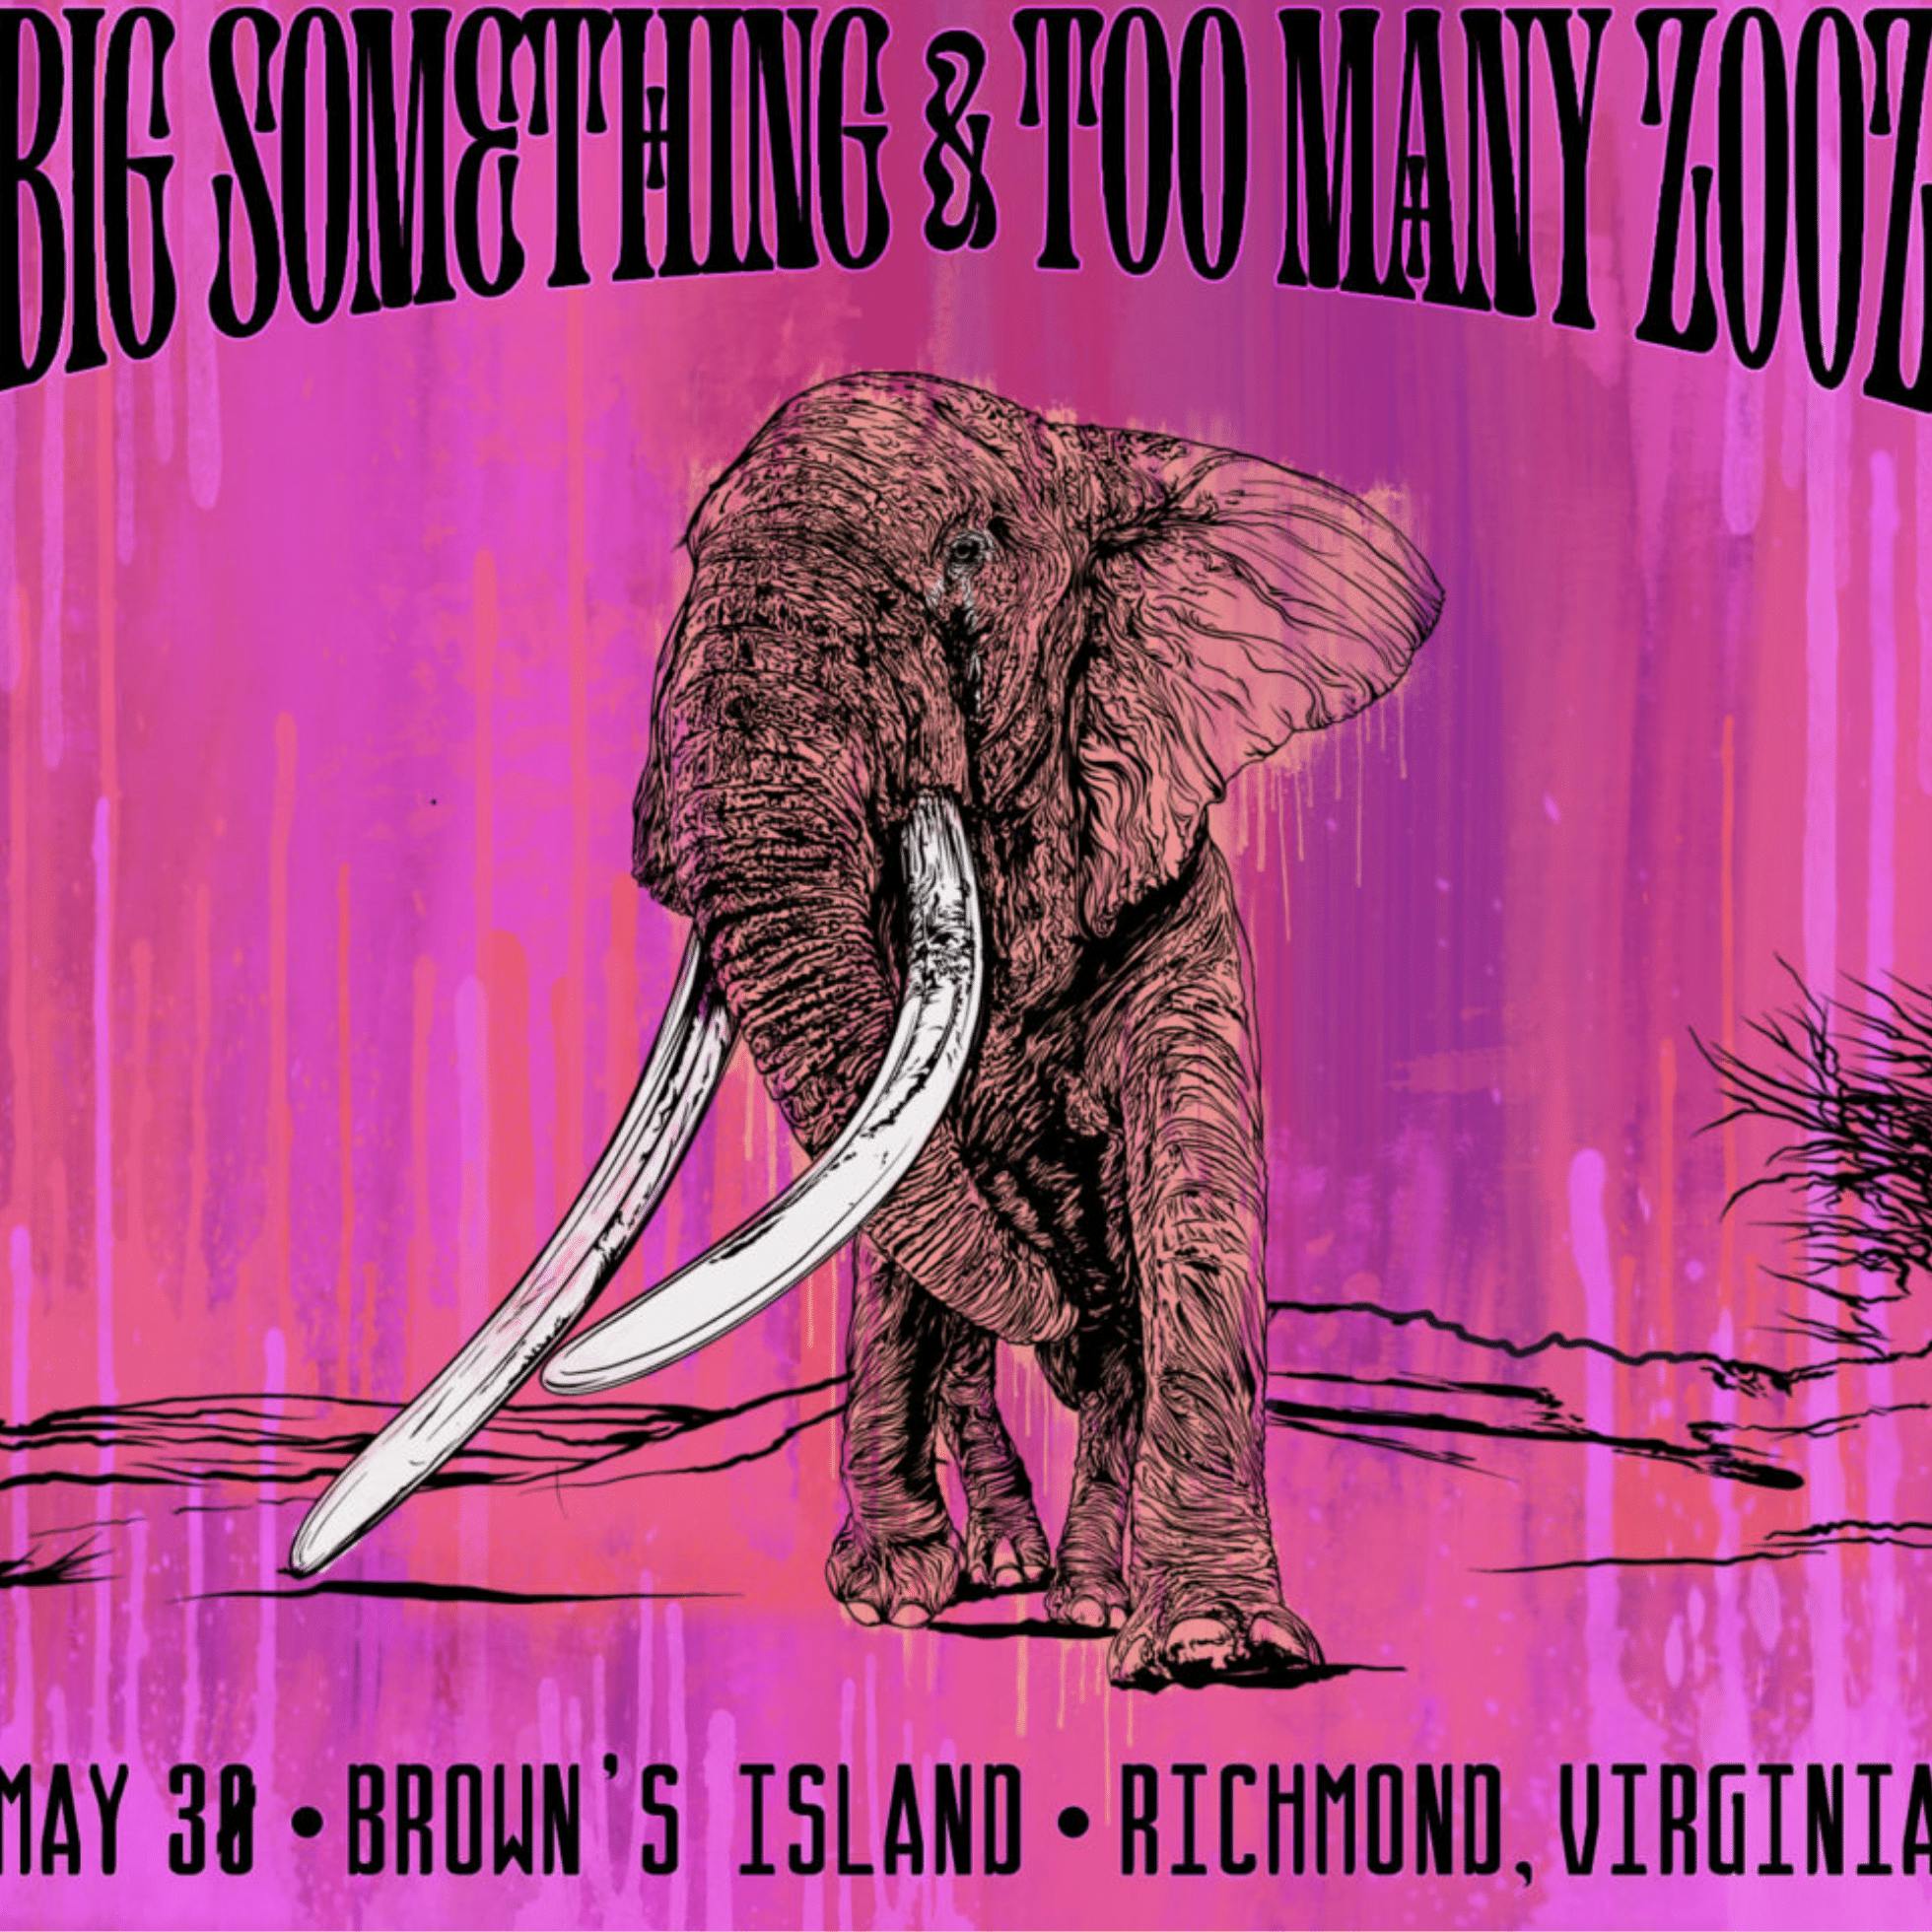 Big Something & Too Many Zooz at Brown’s Island